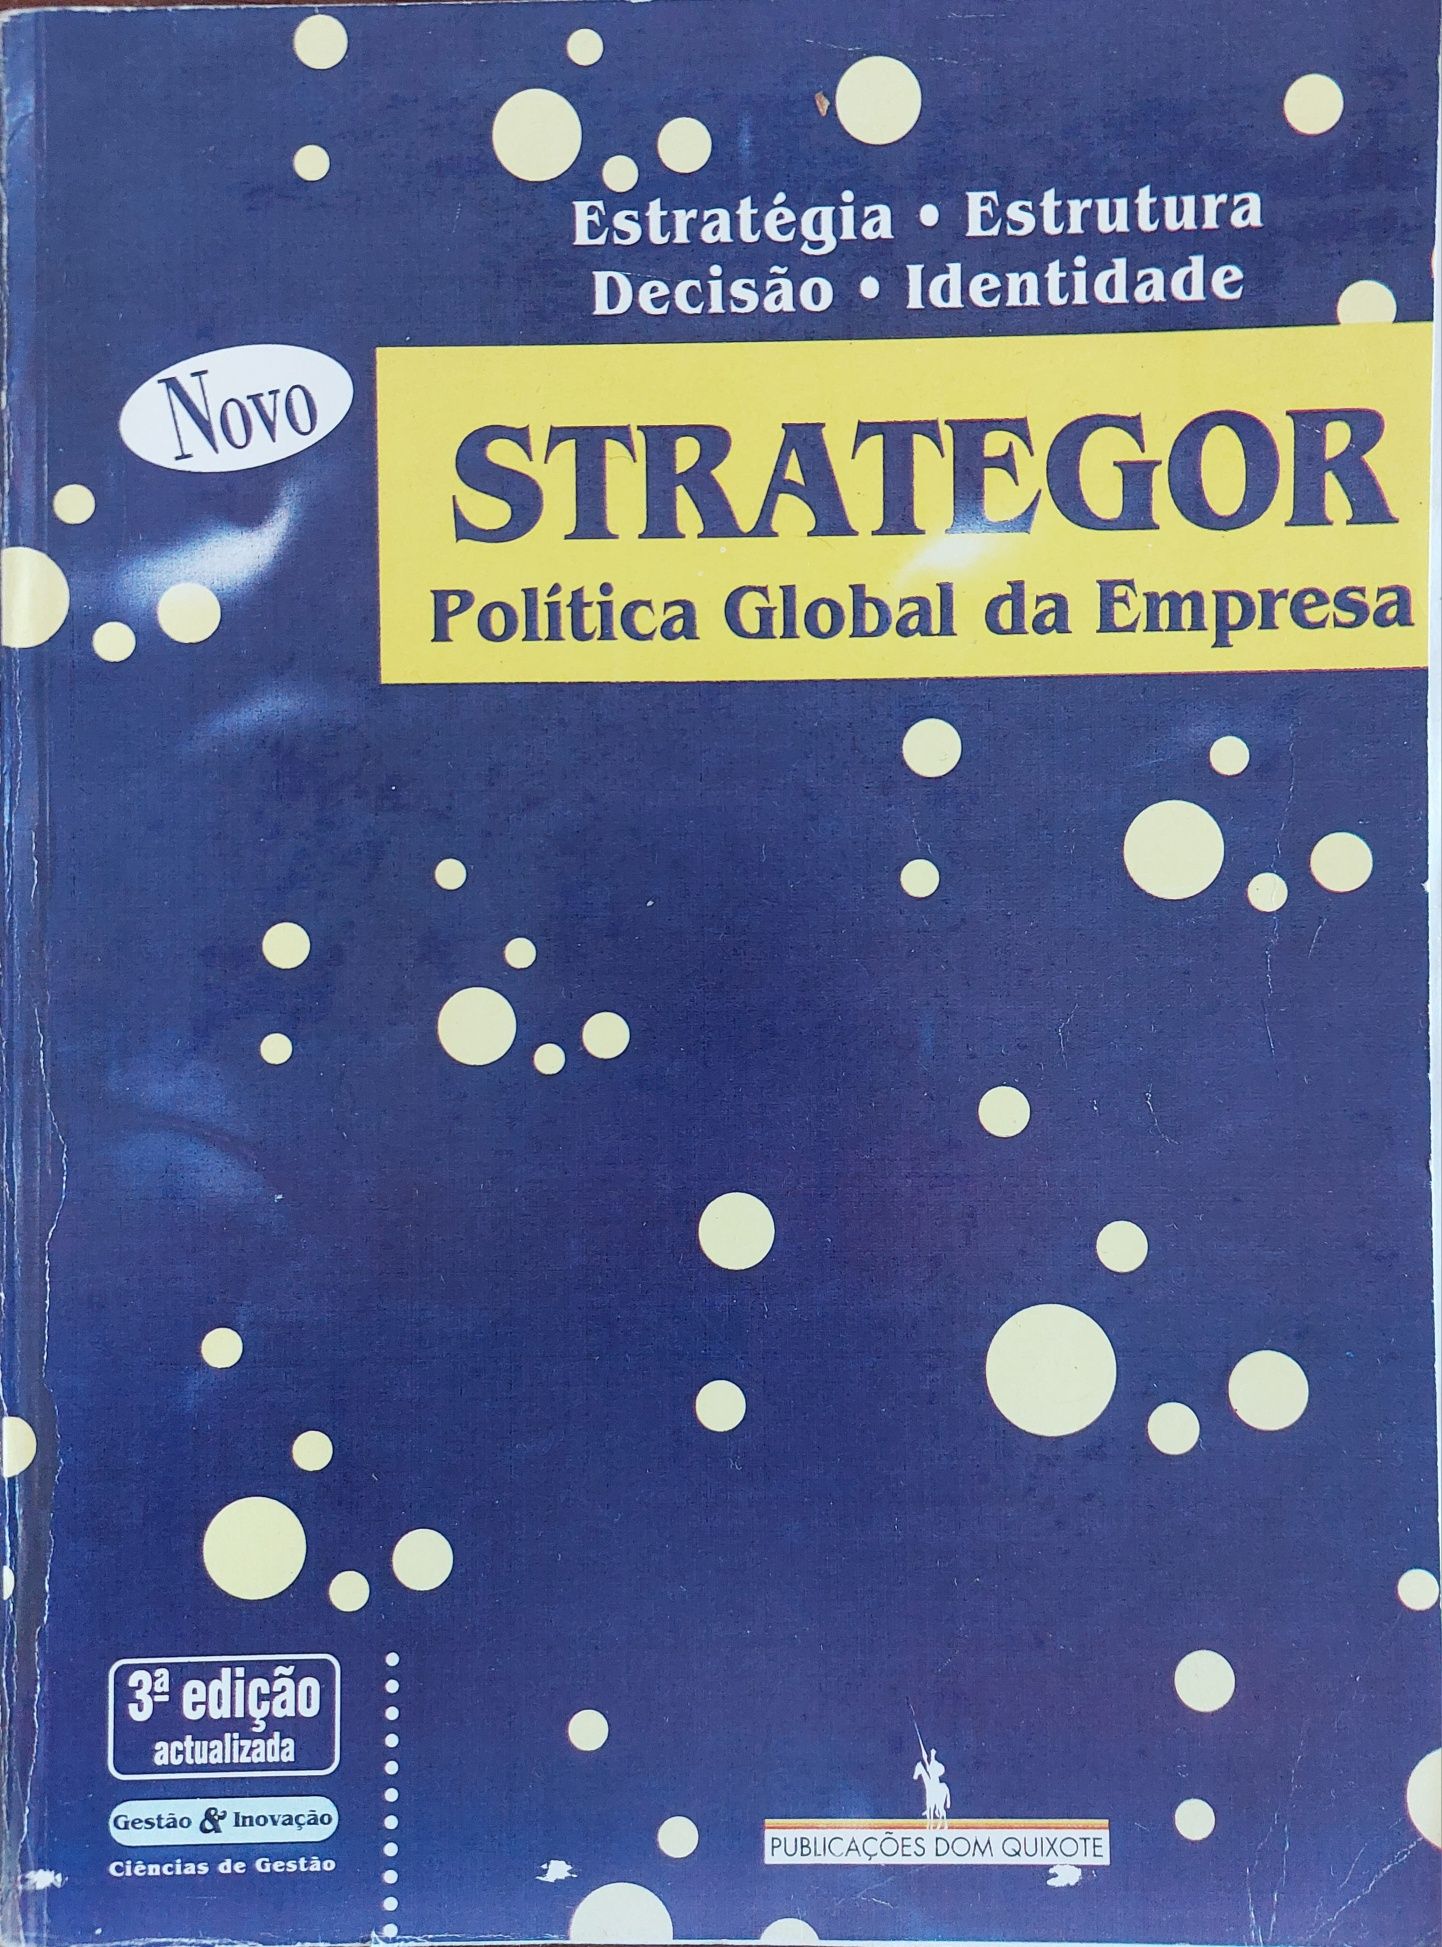 STRATEGOR (Política Global da Empresa)